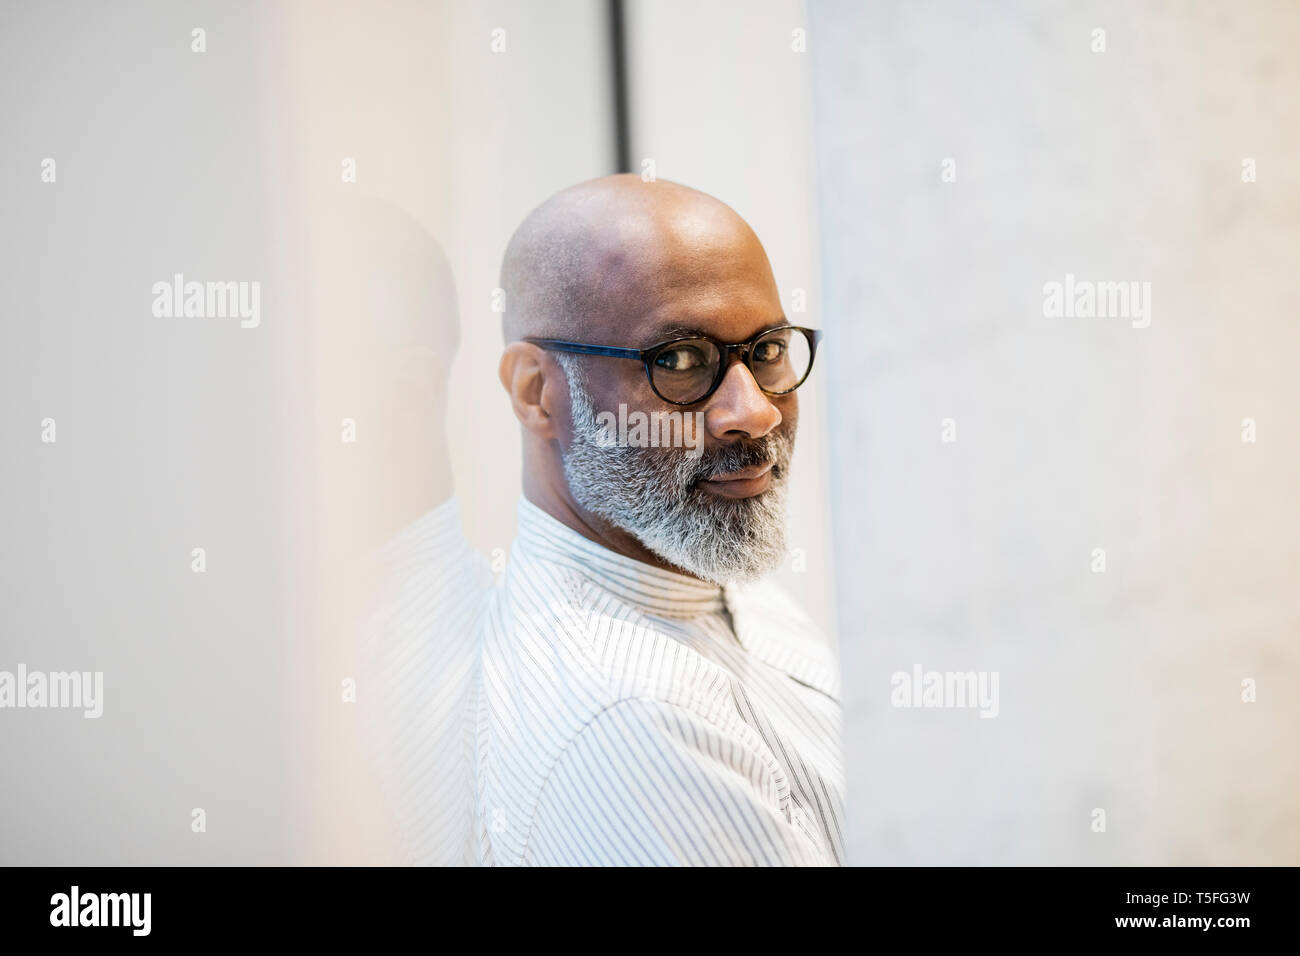 Portrait of bald mature businessman with grey beard wearing glasses Stock Photo